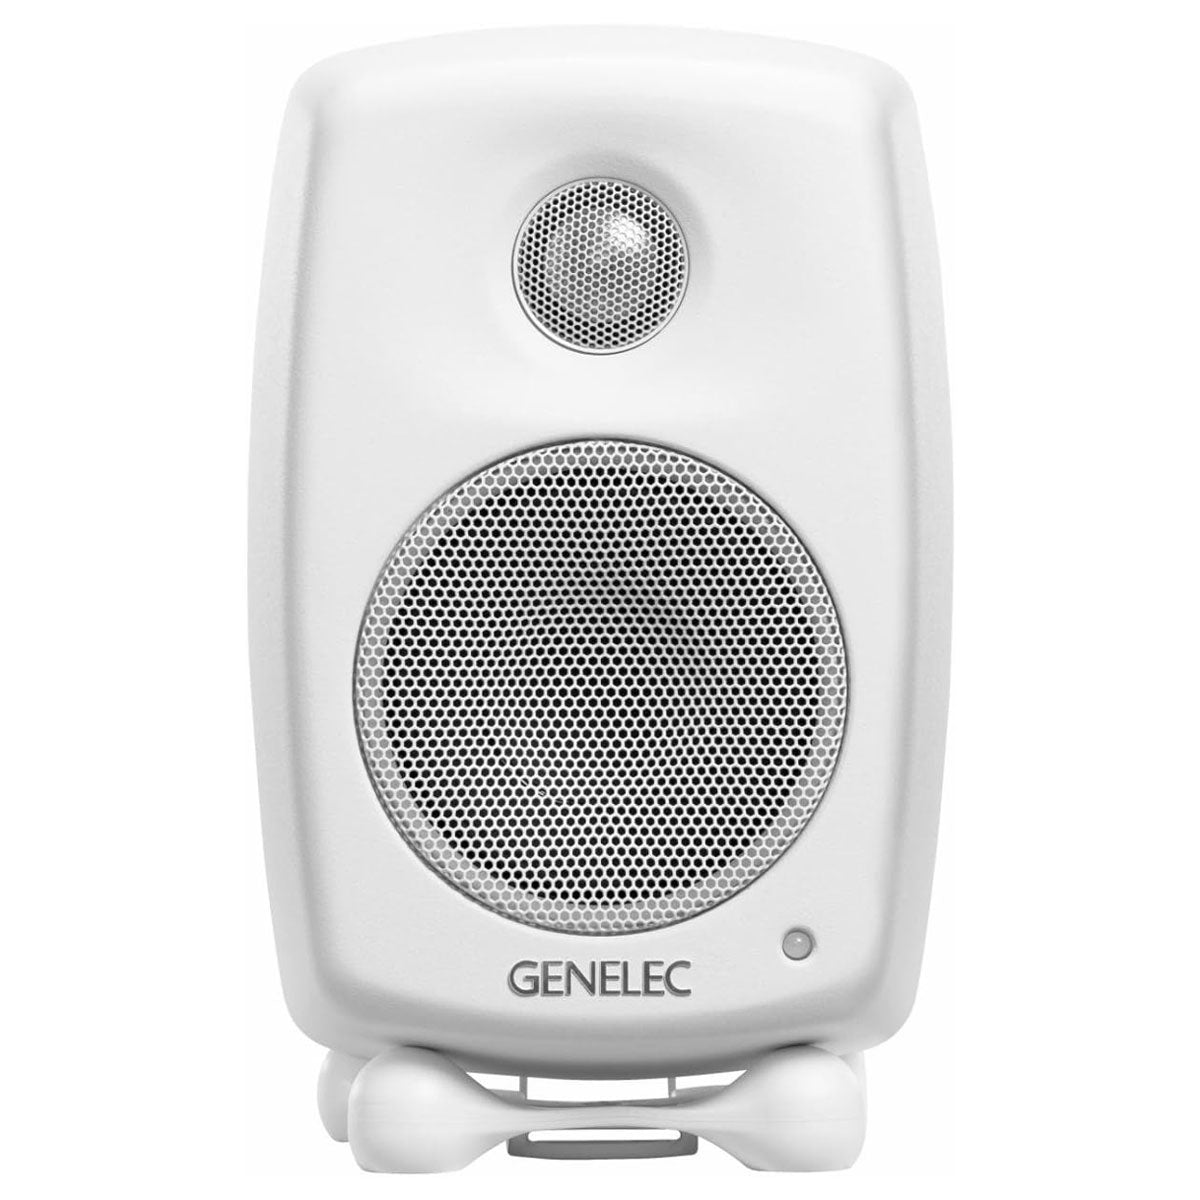 Genelec: G One Active Loudspeaker (G1BW) - White - Single